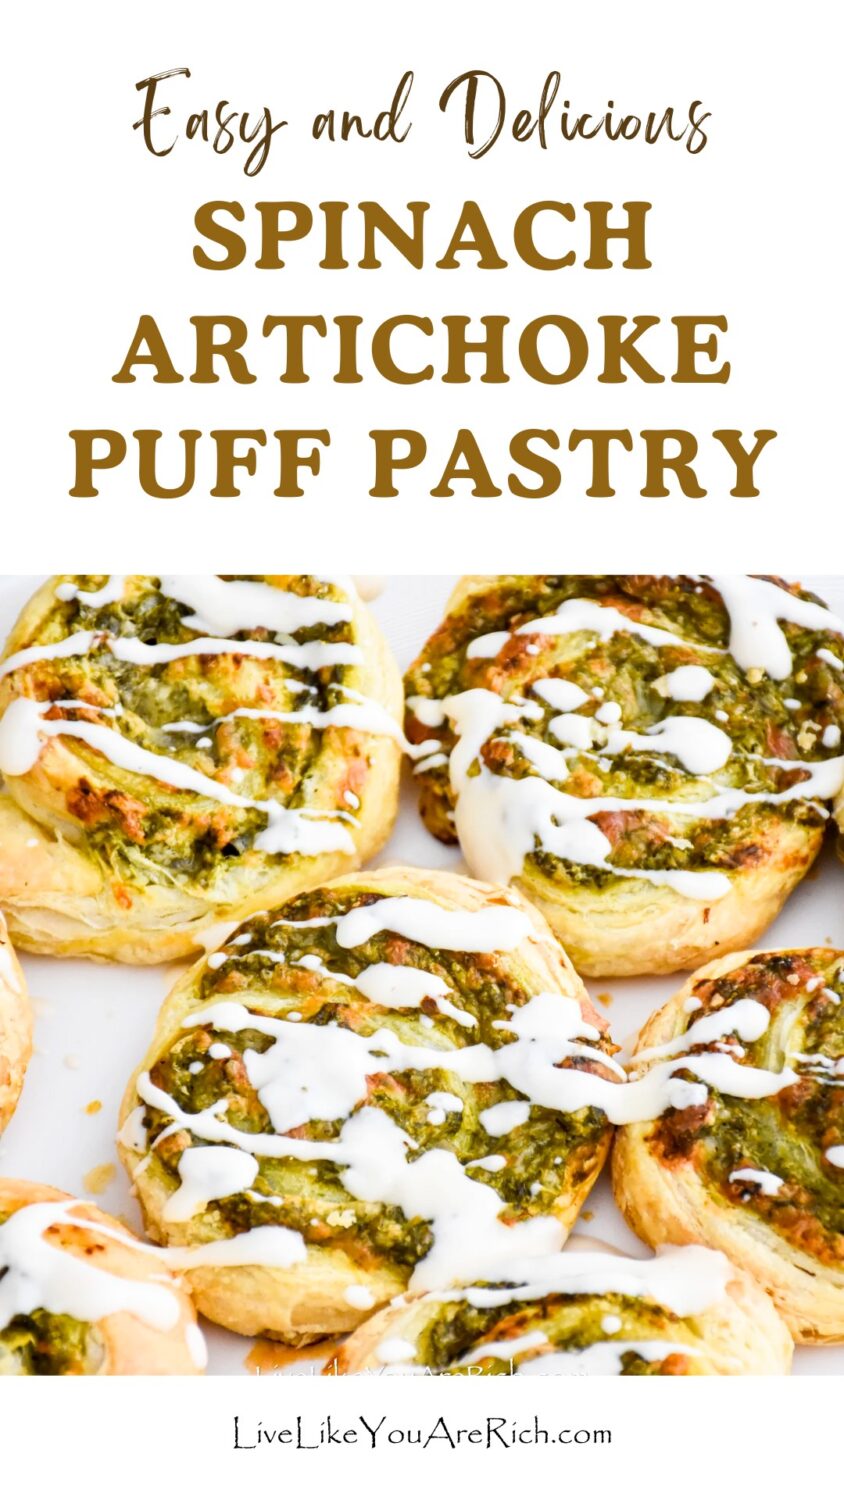 Spinach Artichoke Puff Pastry